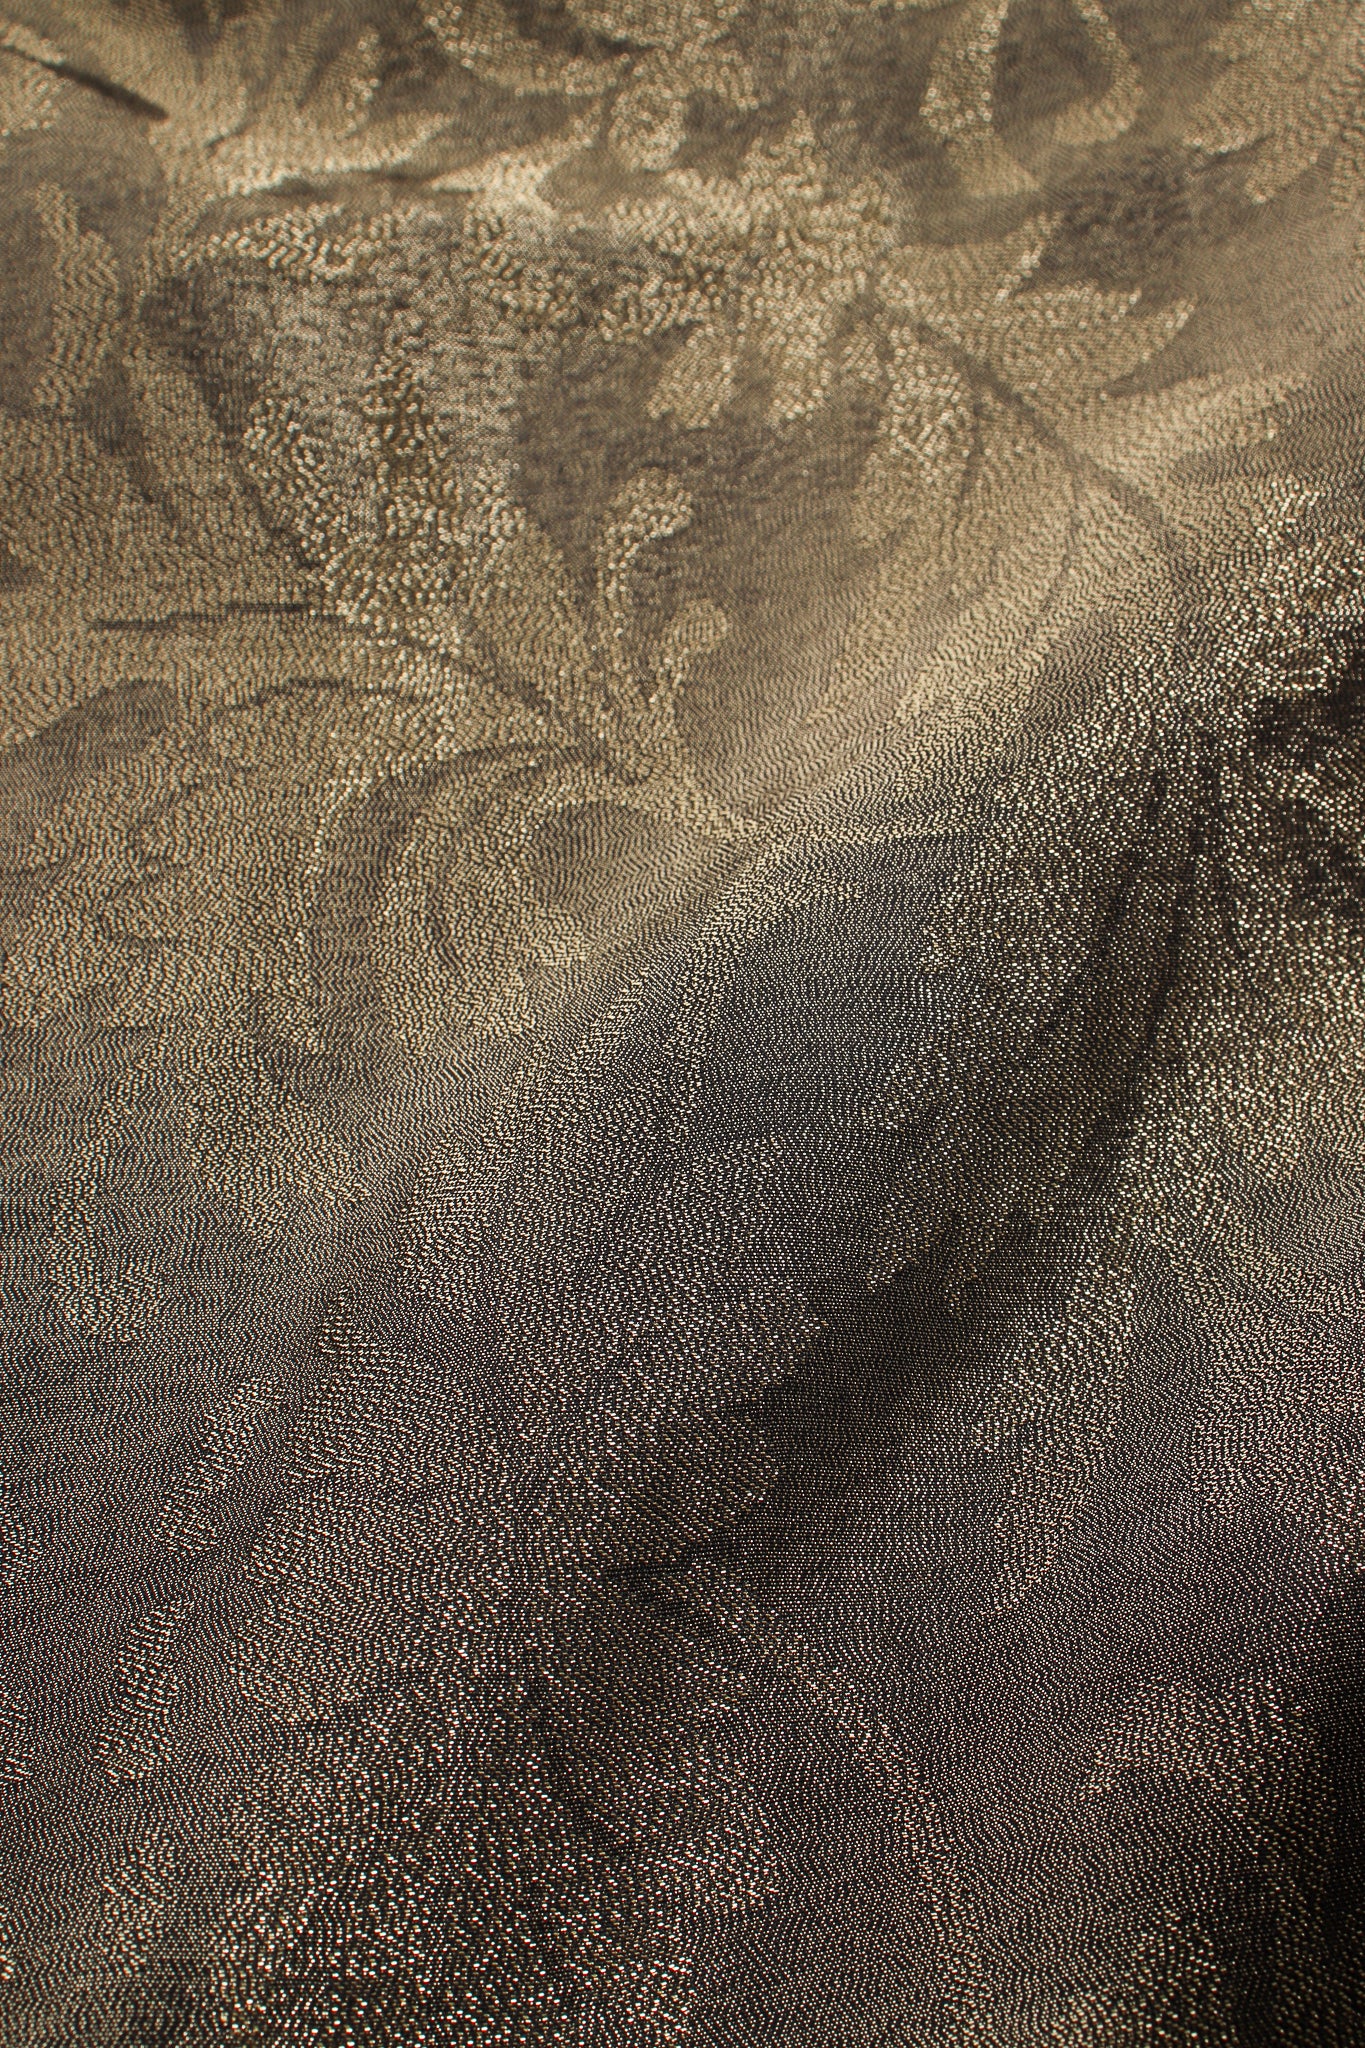 Vintage Carolyne Roehm Metallic Backless Waist Wrap Top fabric detail at Recess Los Angeles